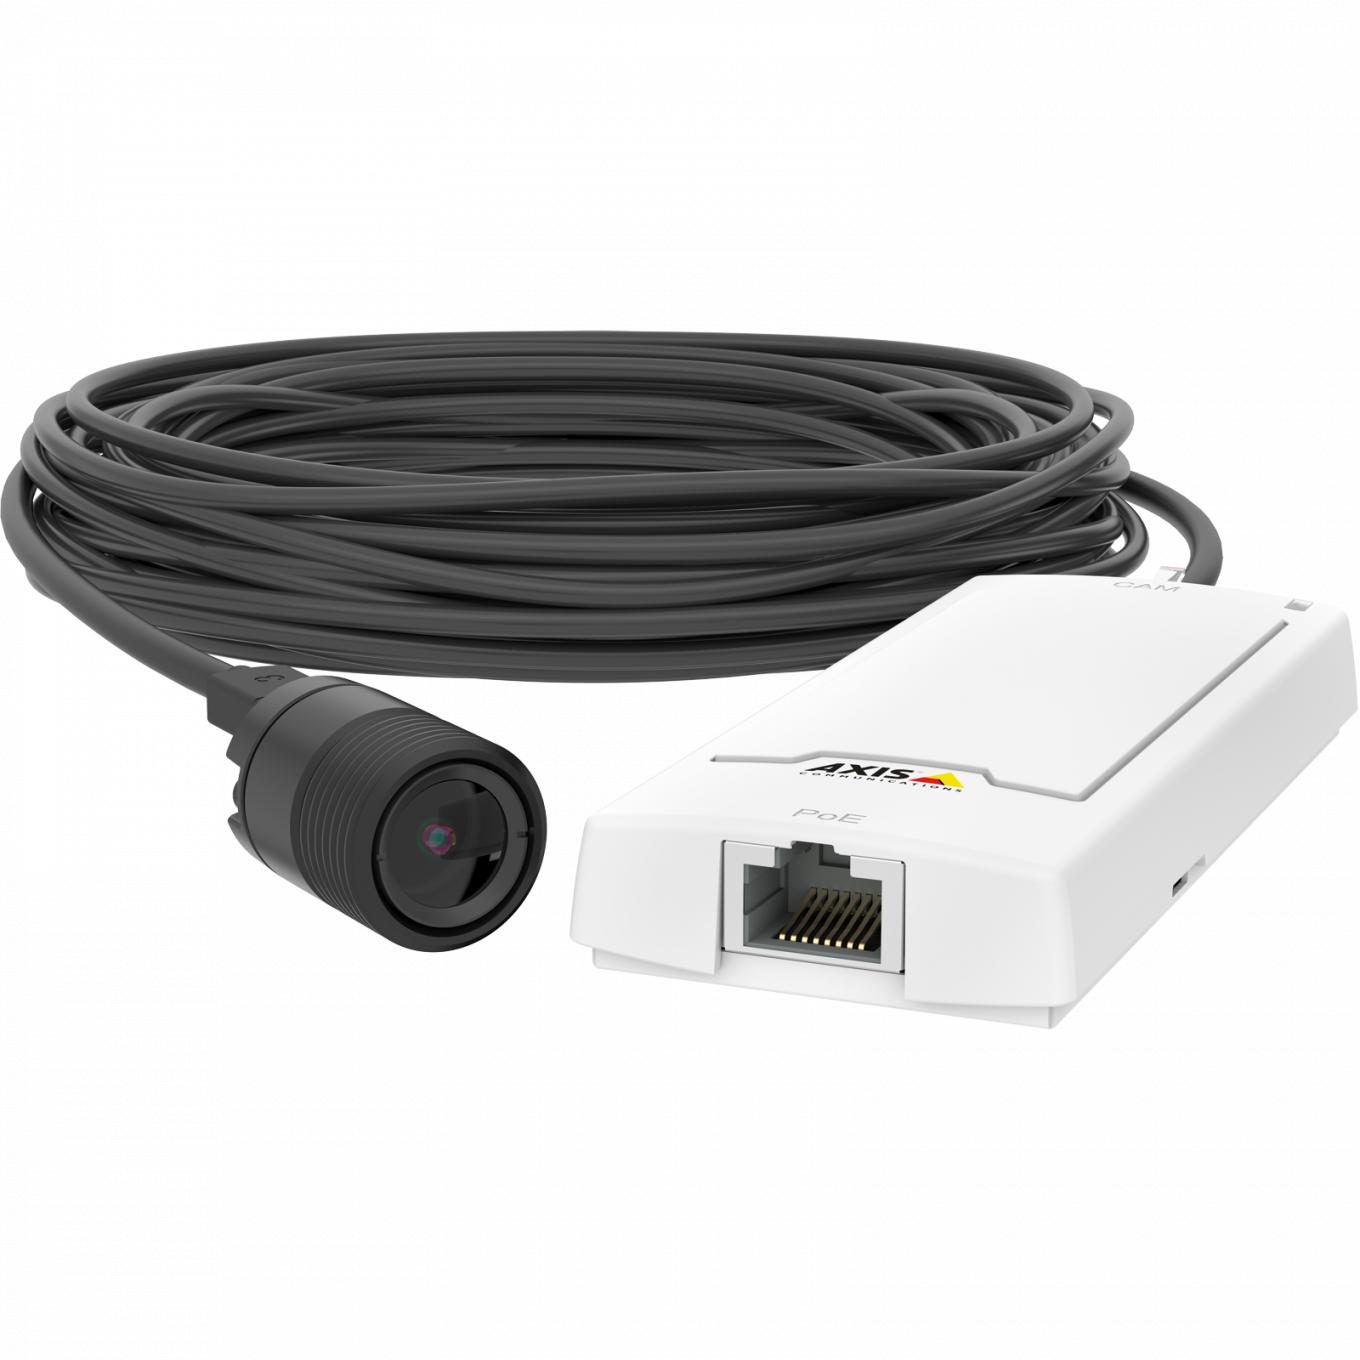 AXIS P1245 Network Camera는 Axis Zipstram 기술을 탑재하고 있습니다. 이 제품은 왼쪽 각도에서 본 것입니다. 